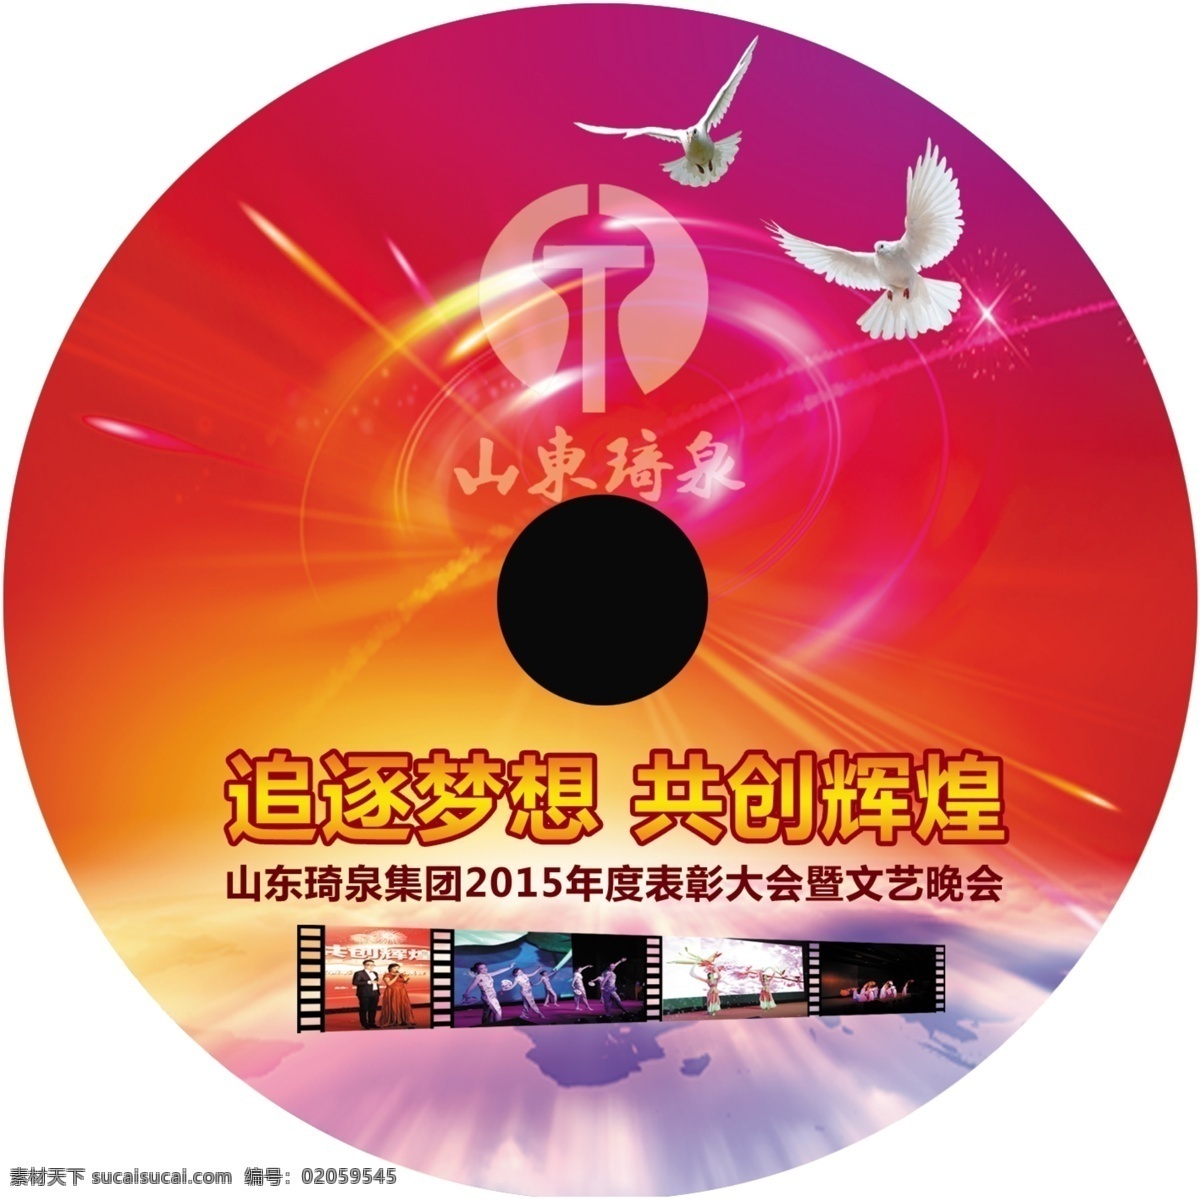 cd 光盘 封面设计 企业 宣传 光盘设计 企业形象 年会 热电厂 红色